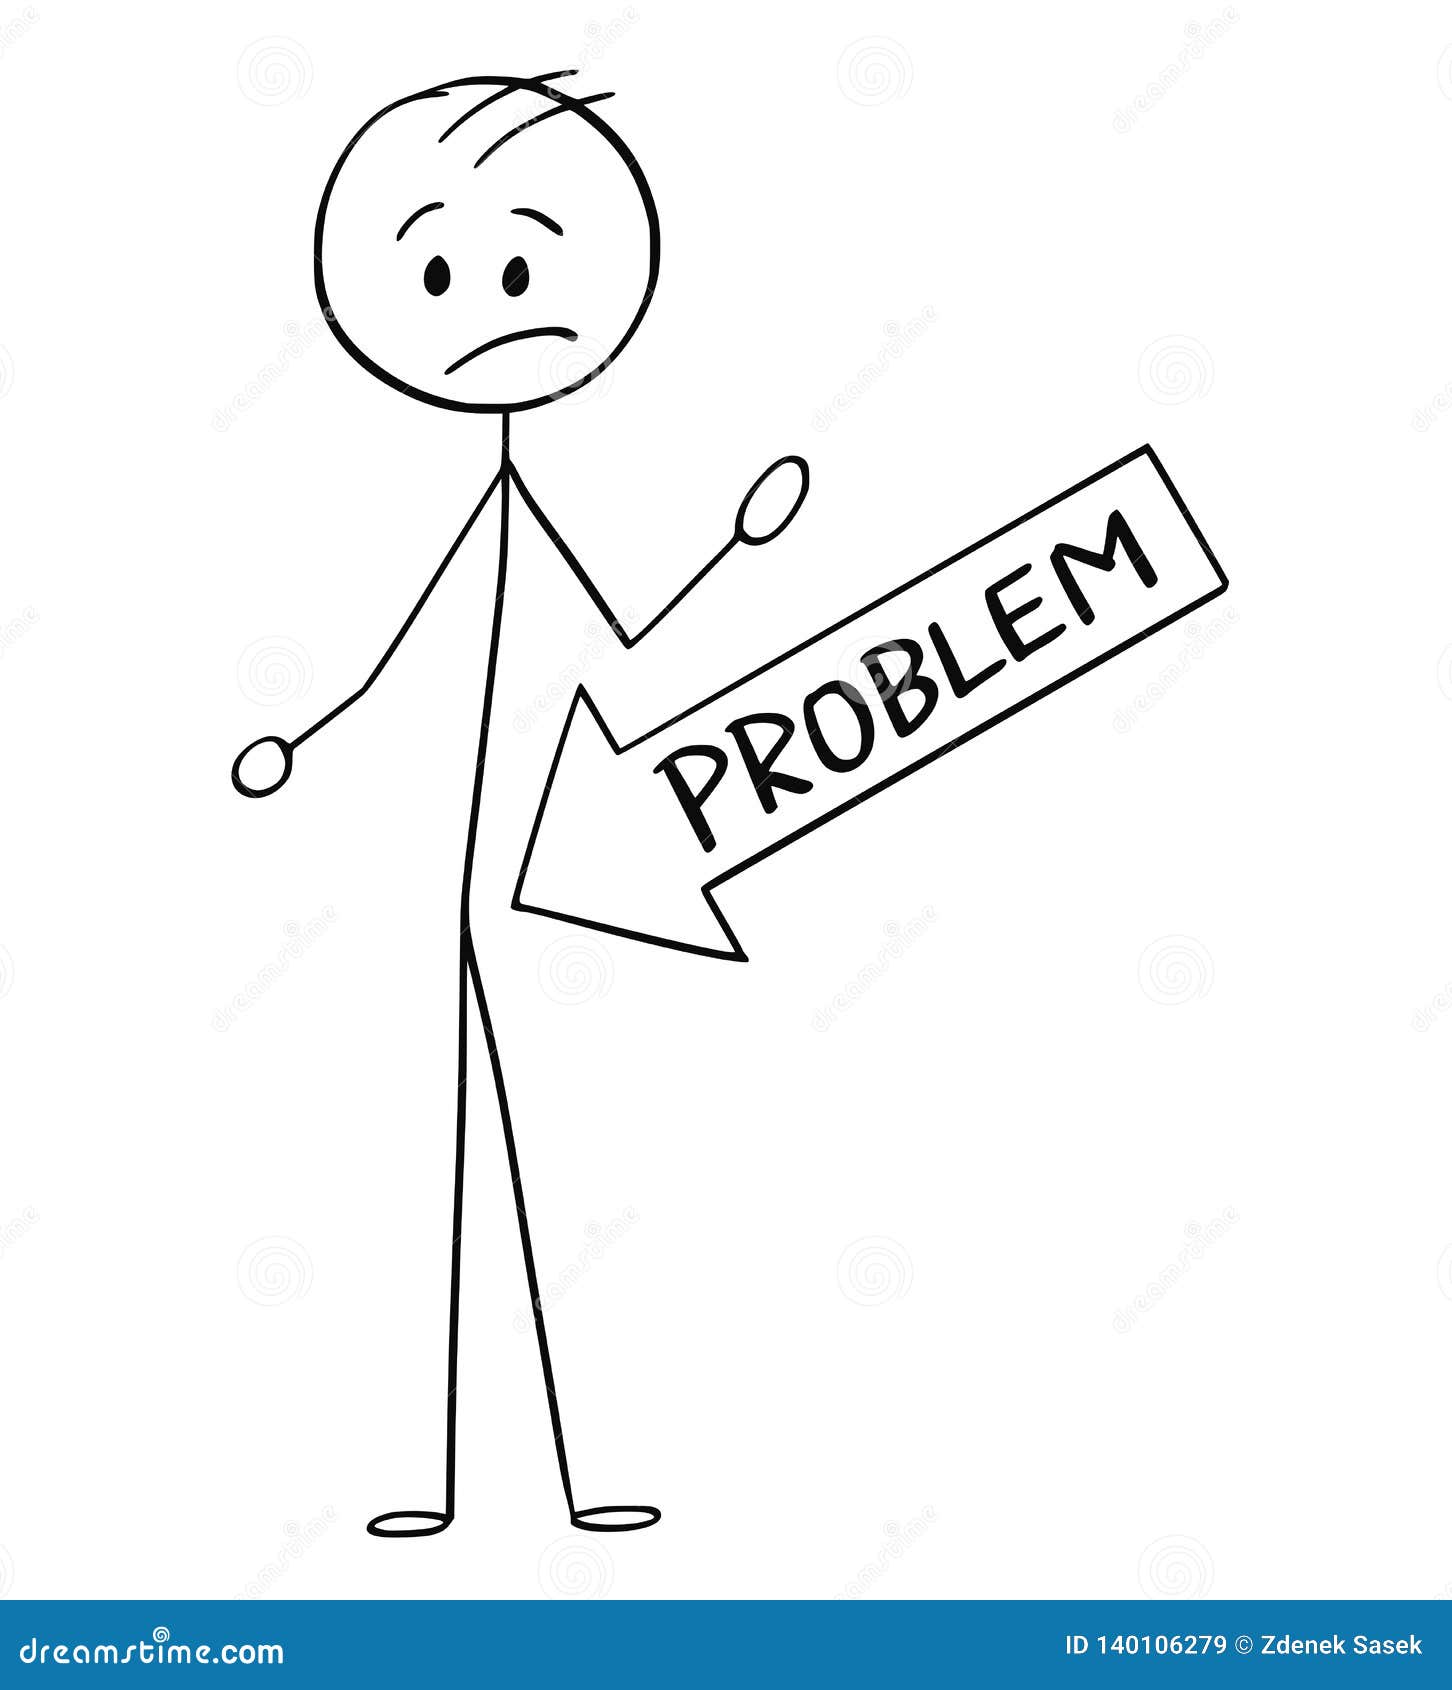 cartoon of big problem arrow pointing at crotch of man